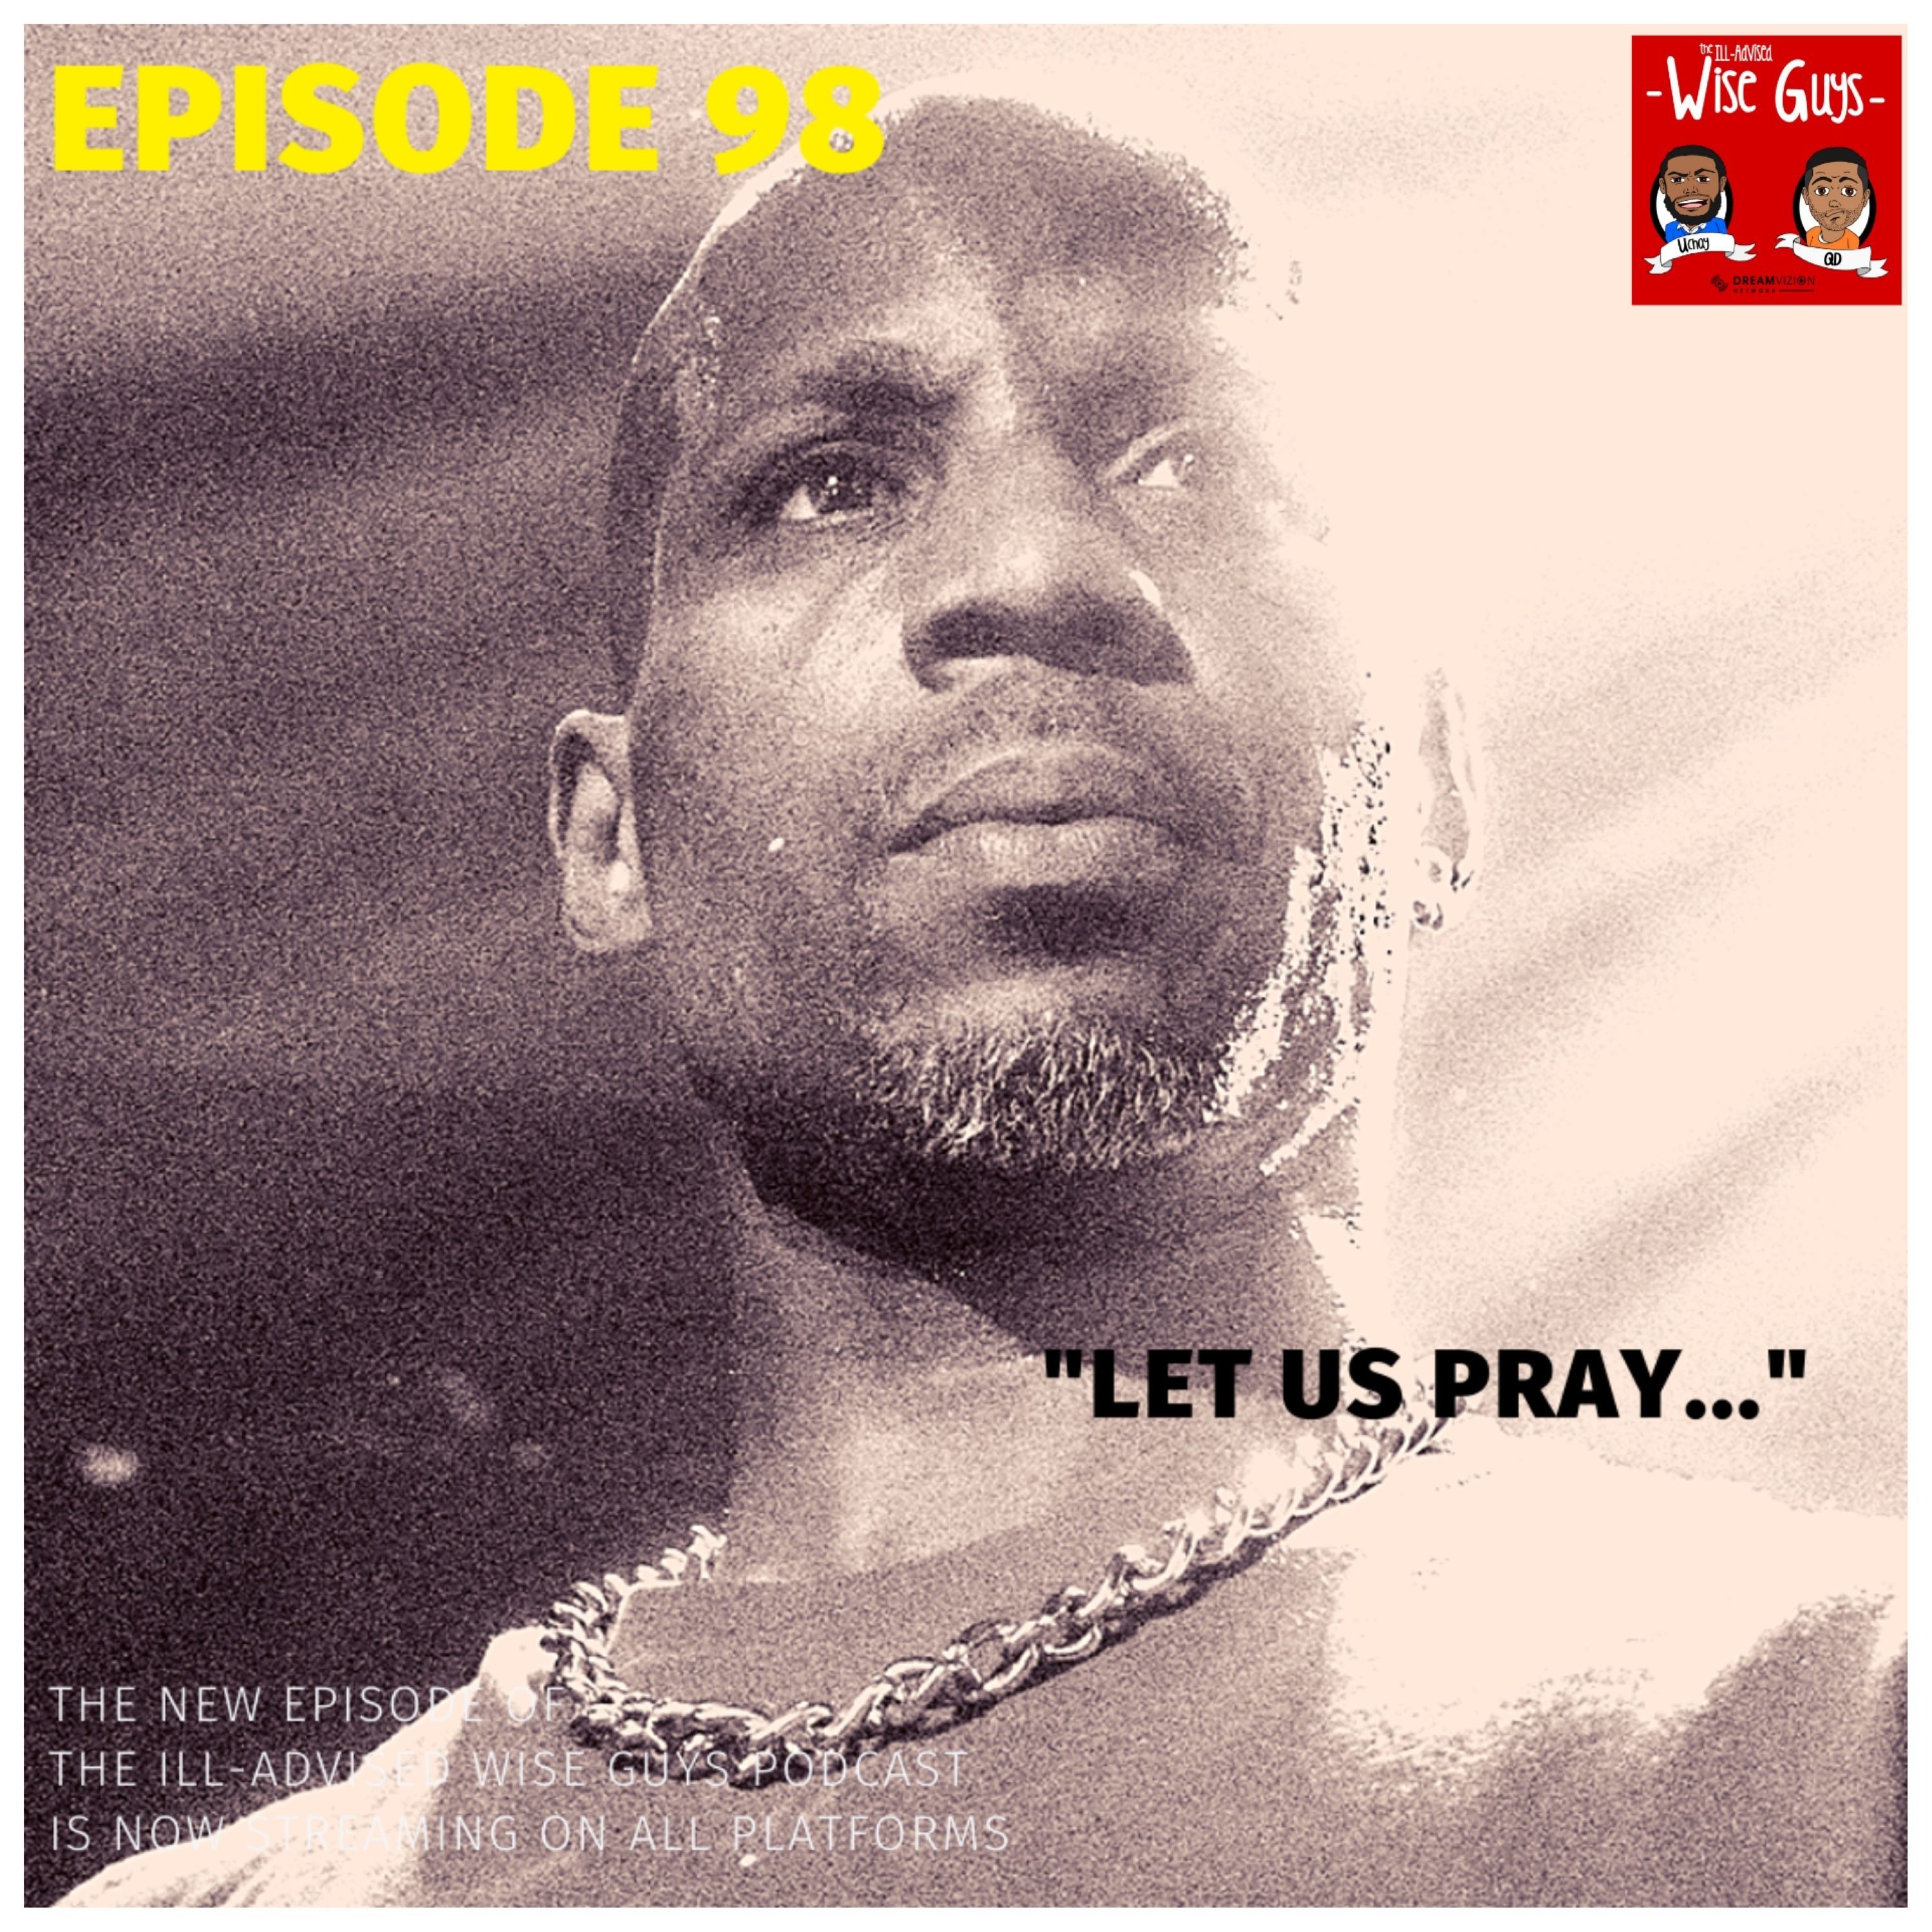 Episode 98 - "Let Us Pray..." Image